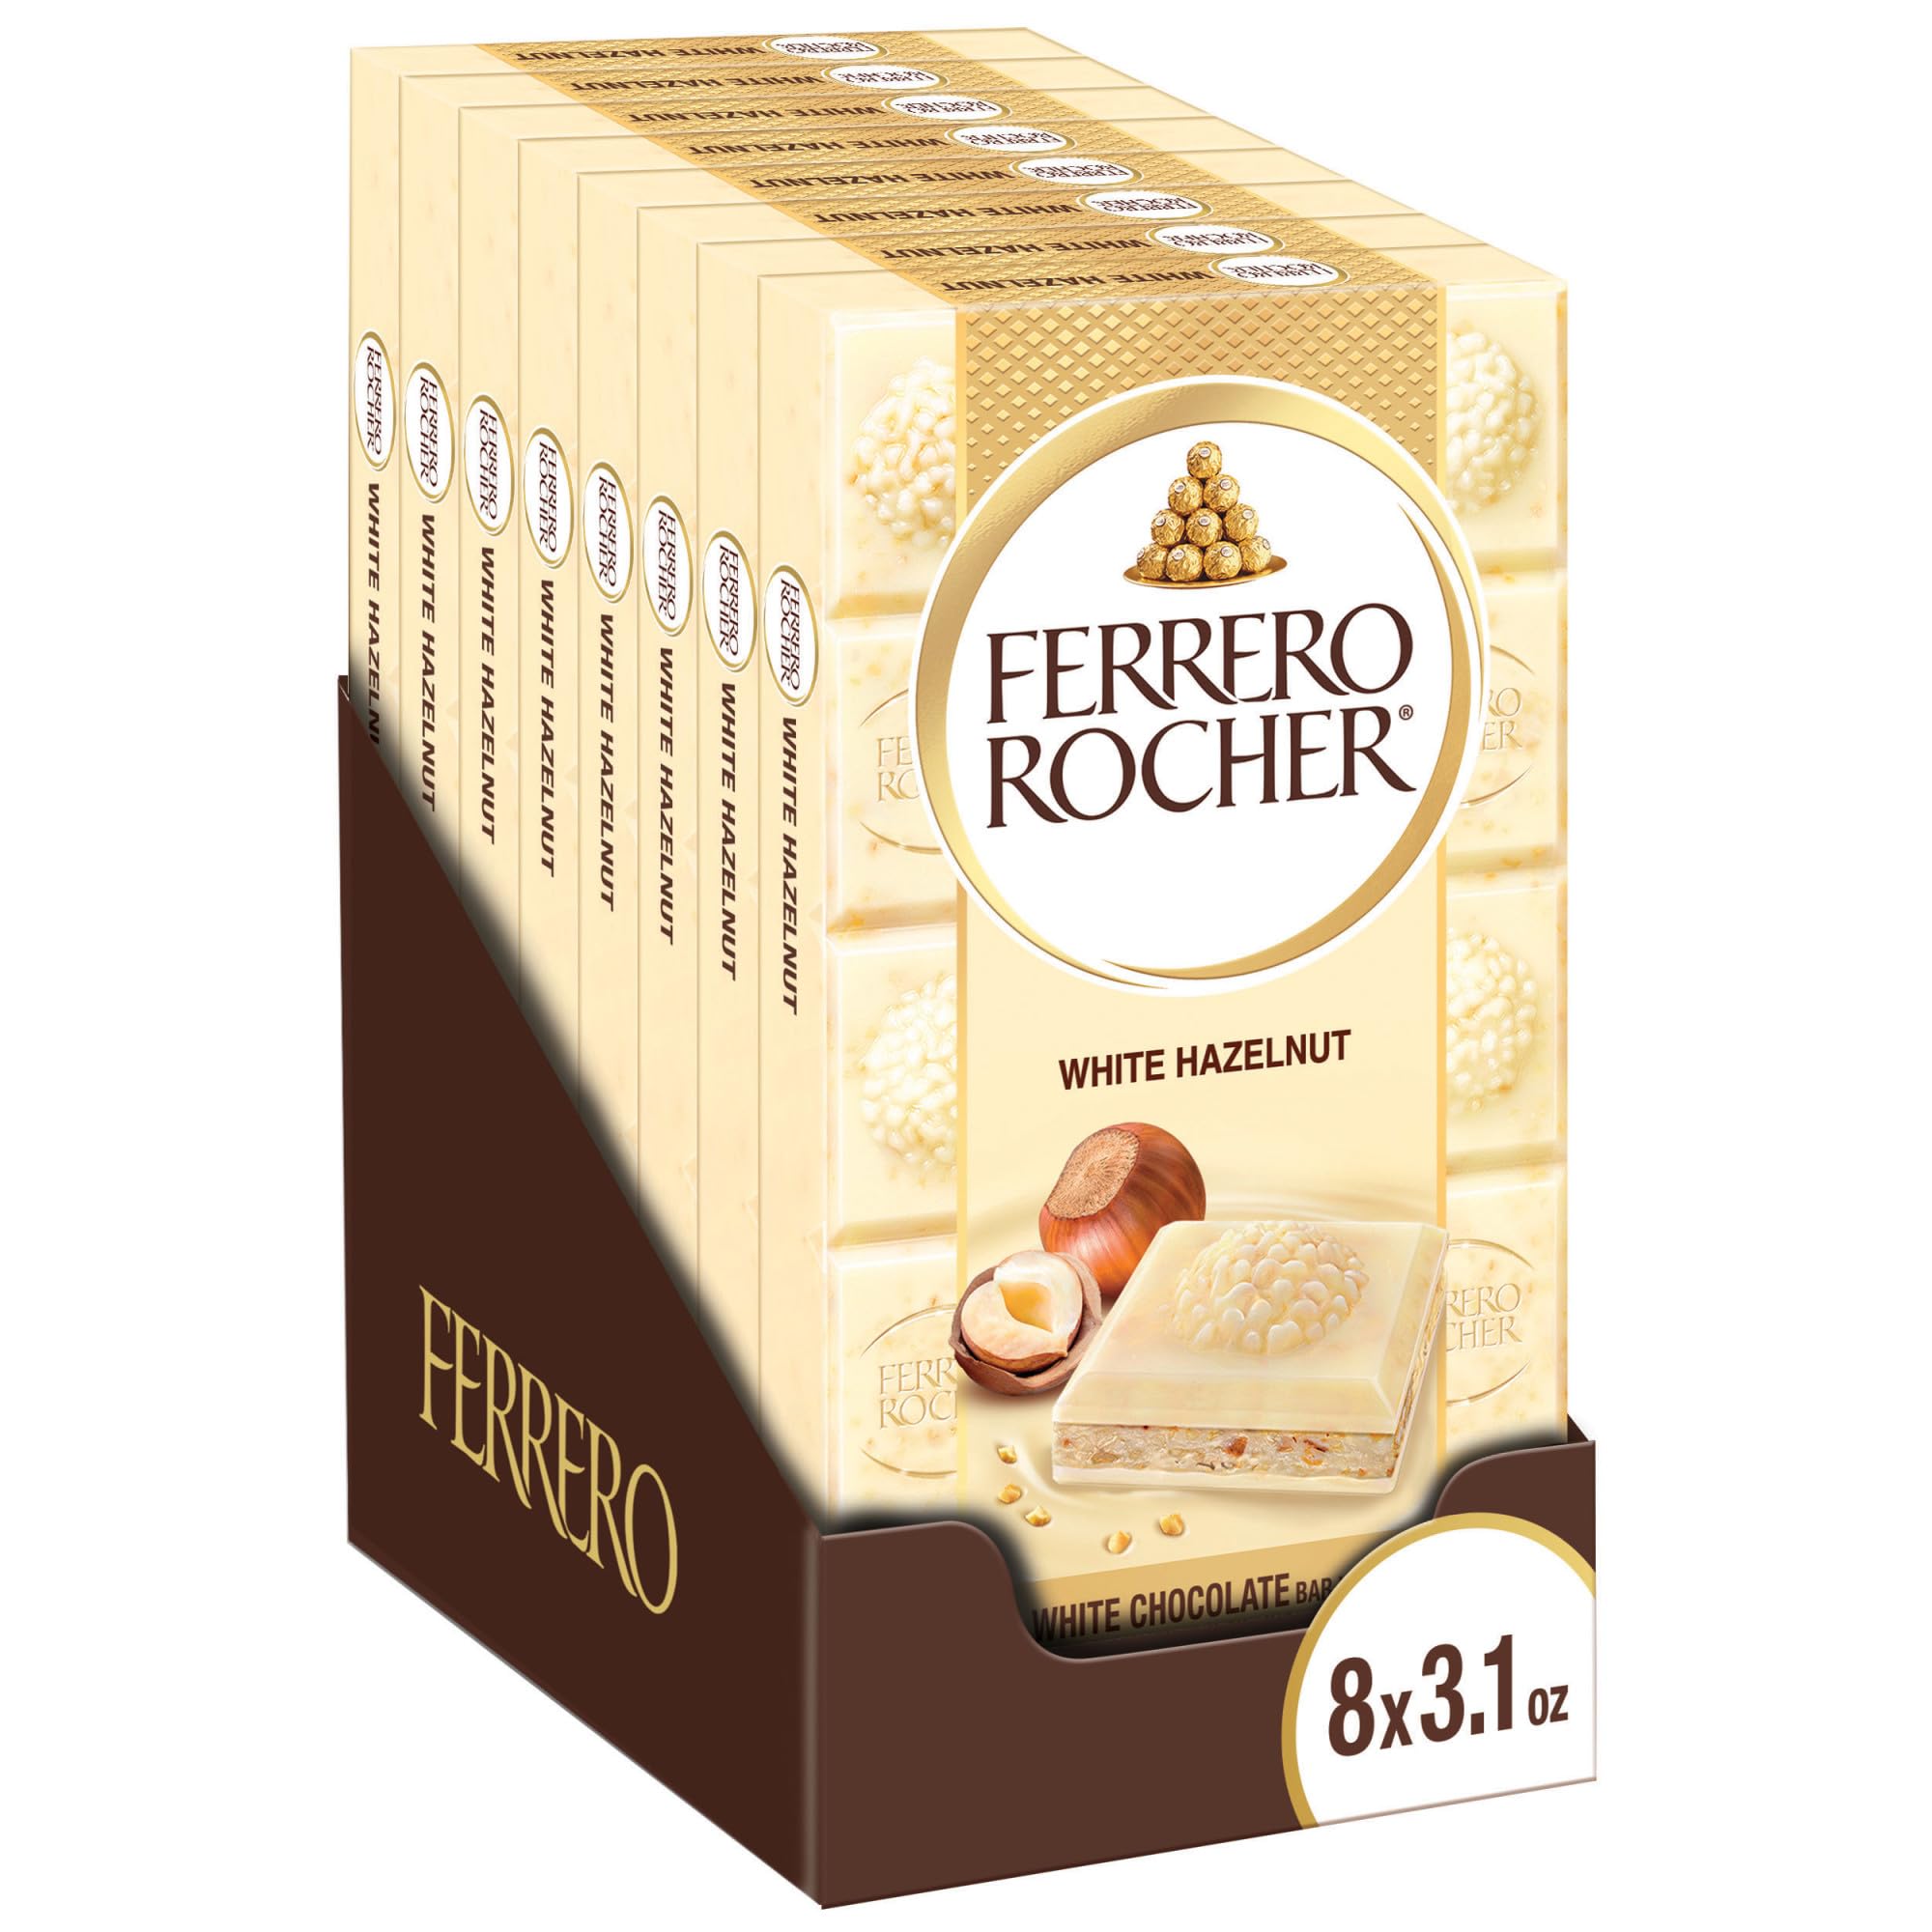 8-Pack 3.1-Oz Ferrero Rocher Premium White Chocolate Hazelnut Bars $13.94 + Free Shipping w/ Prime or on orders over $35